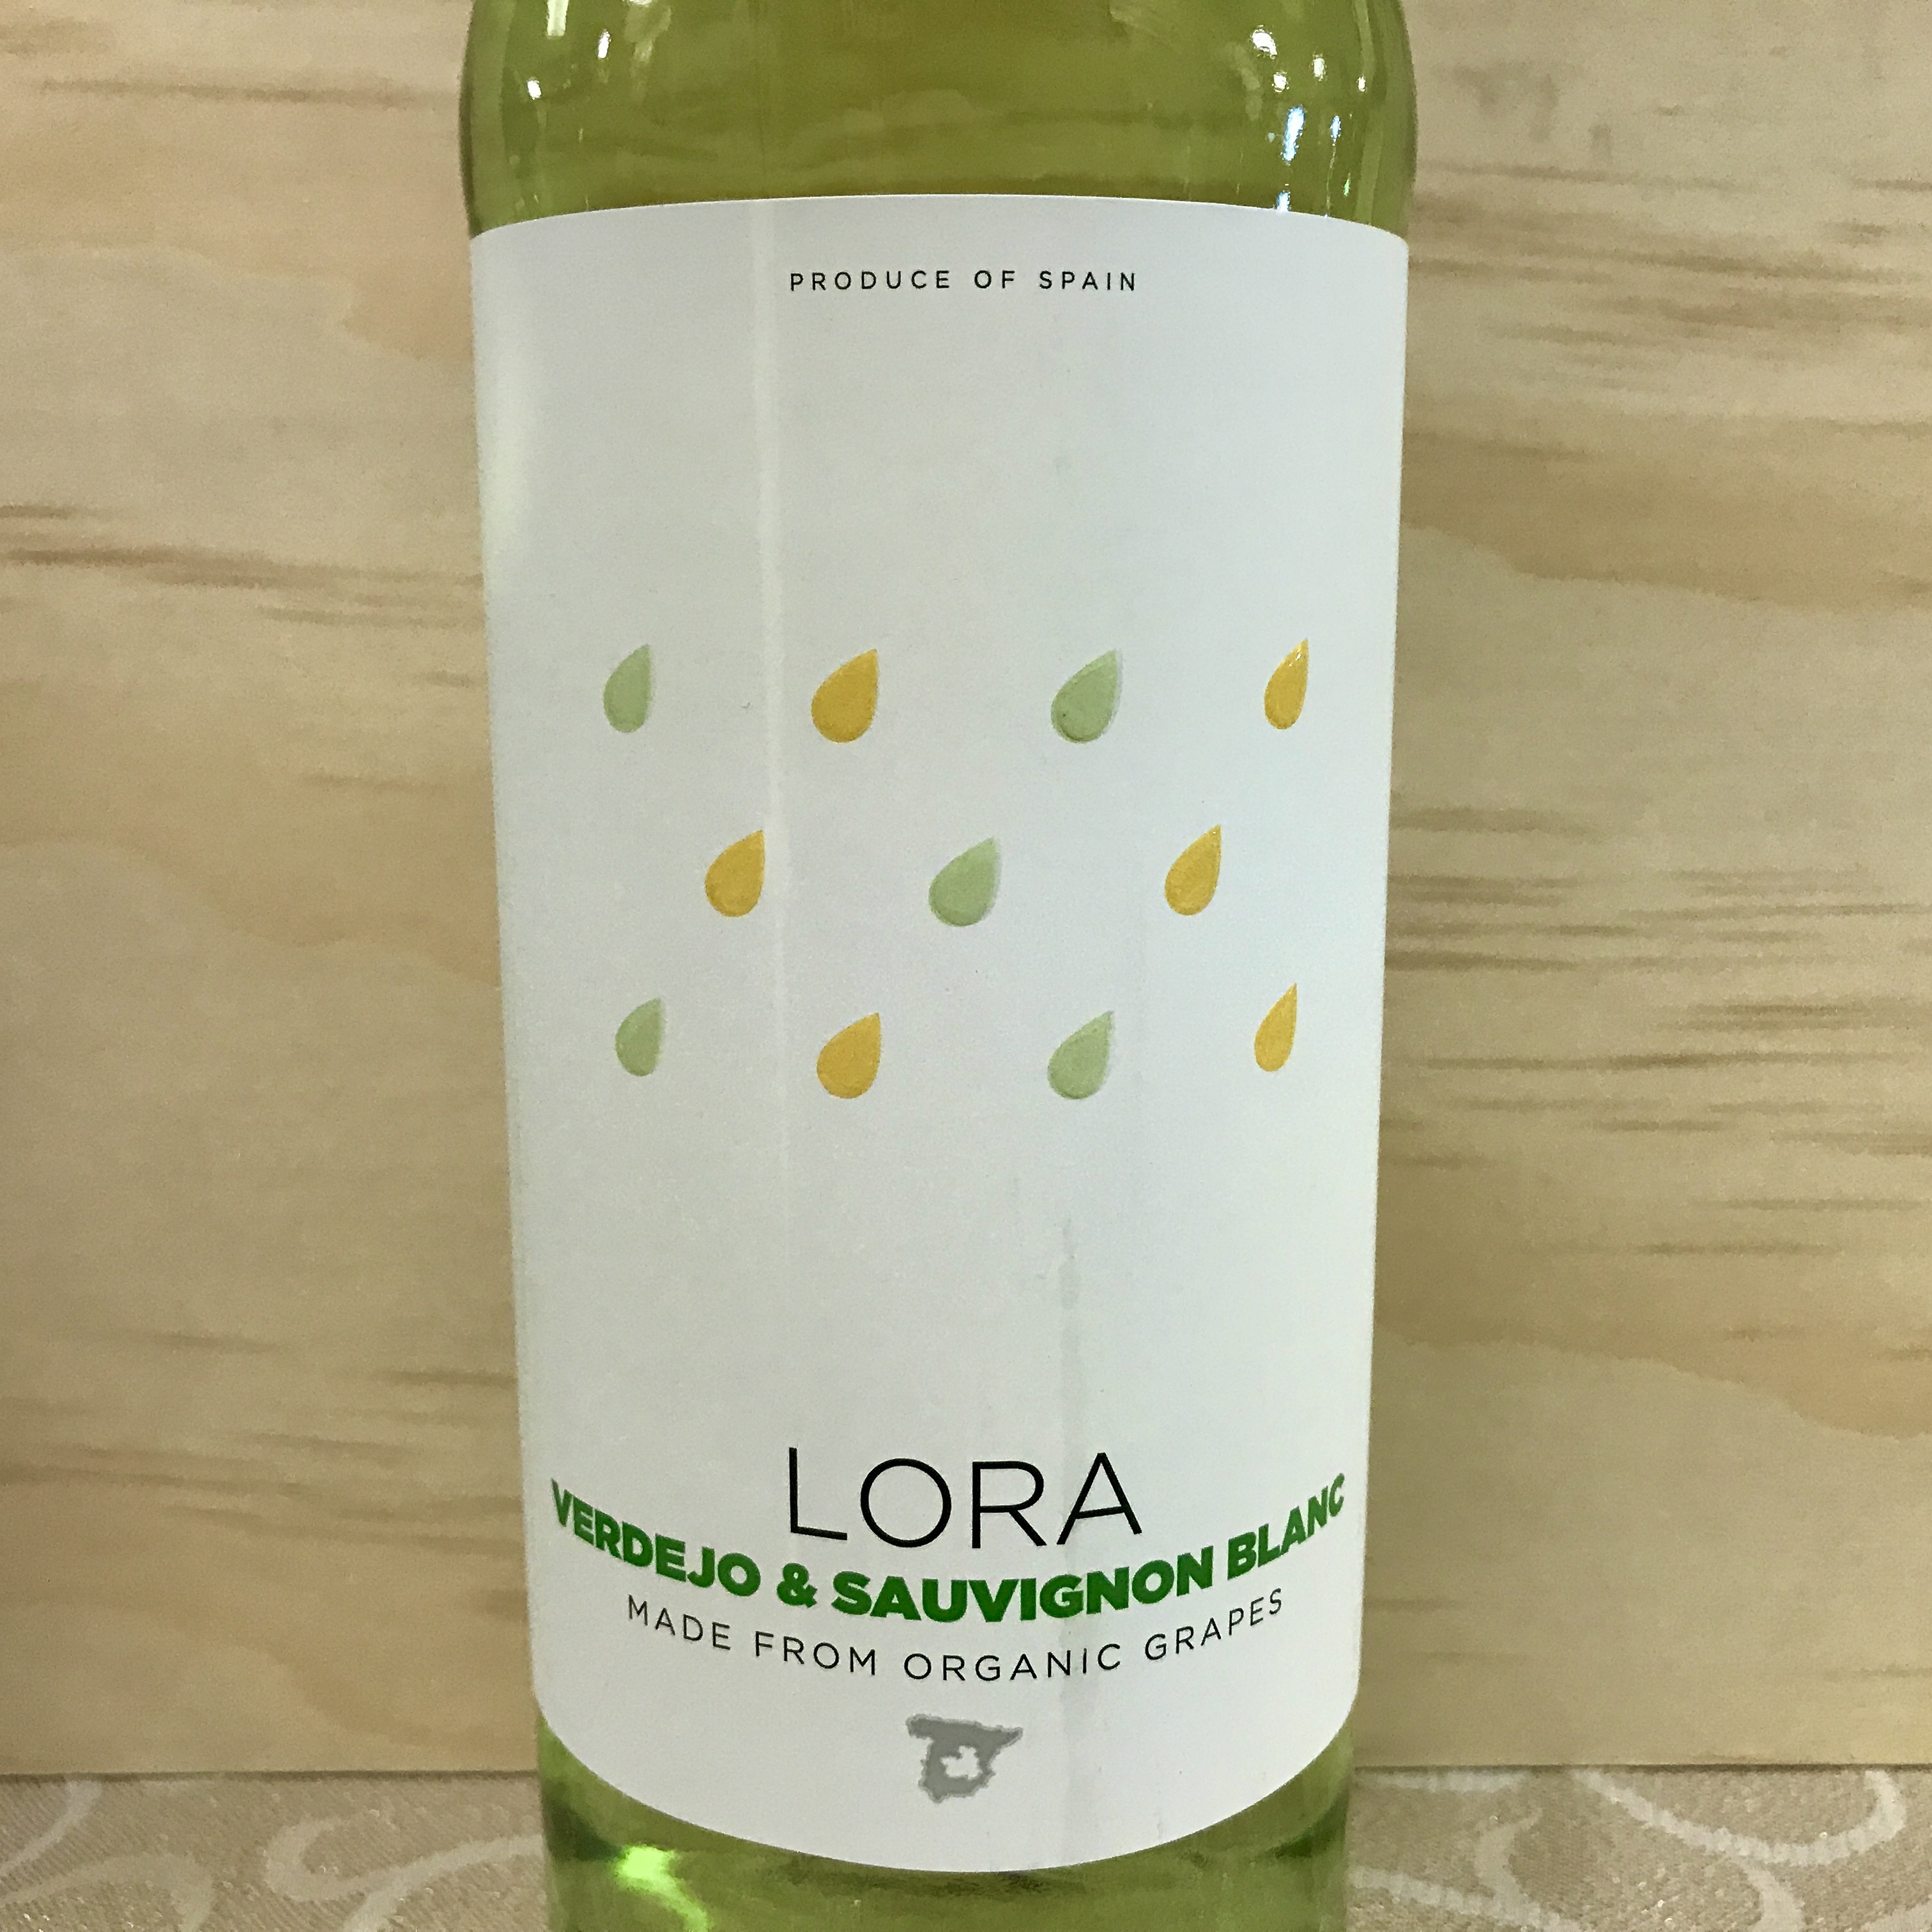 Lora Verdejo - Sauvignon Blanc, made from Organic Grapes 2020